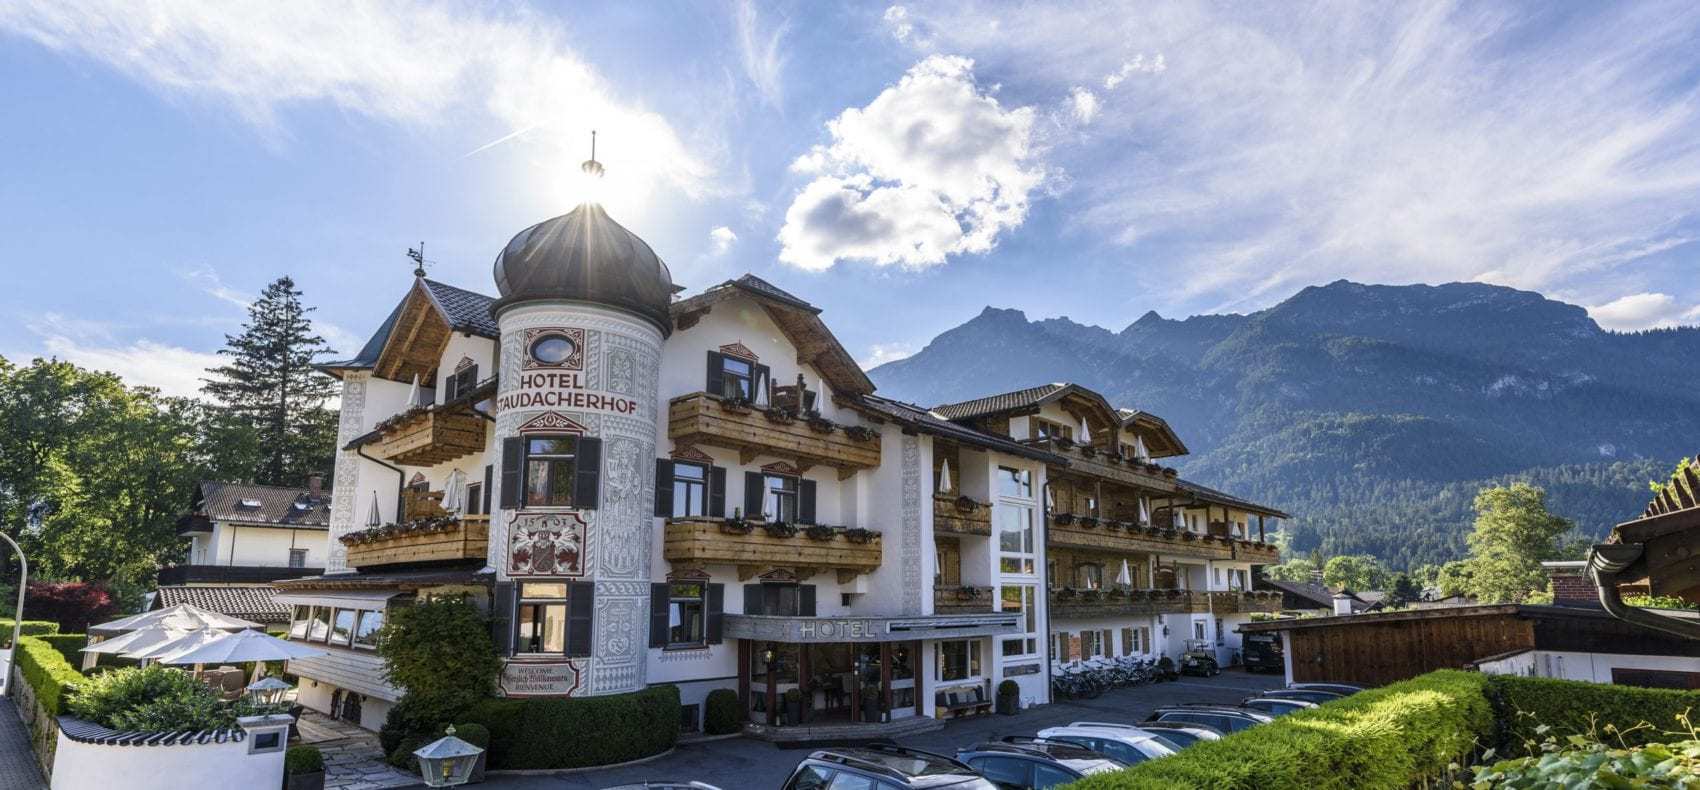 Hotel Staudacherhof in Garmisch-Partenkirchen met bergen op de achtergrond